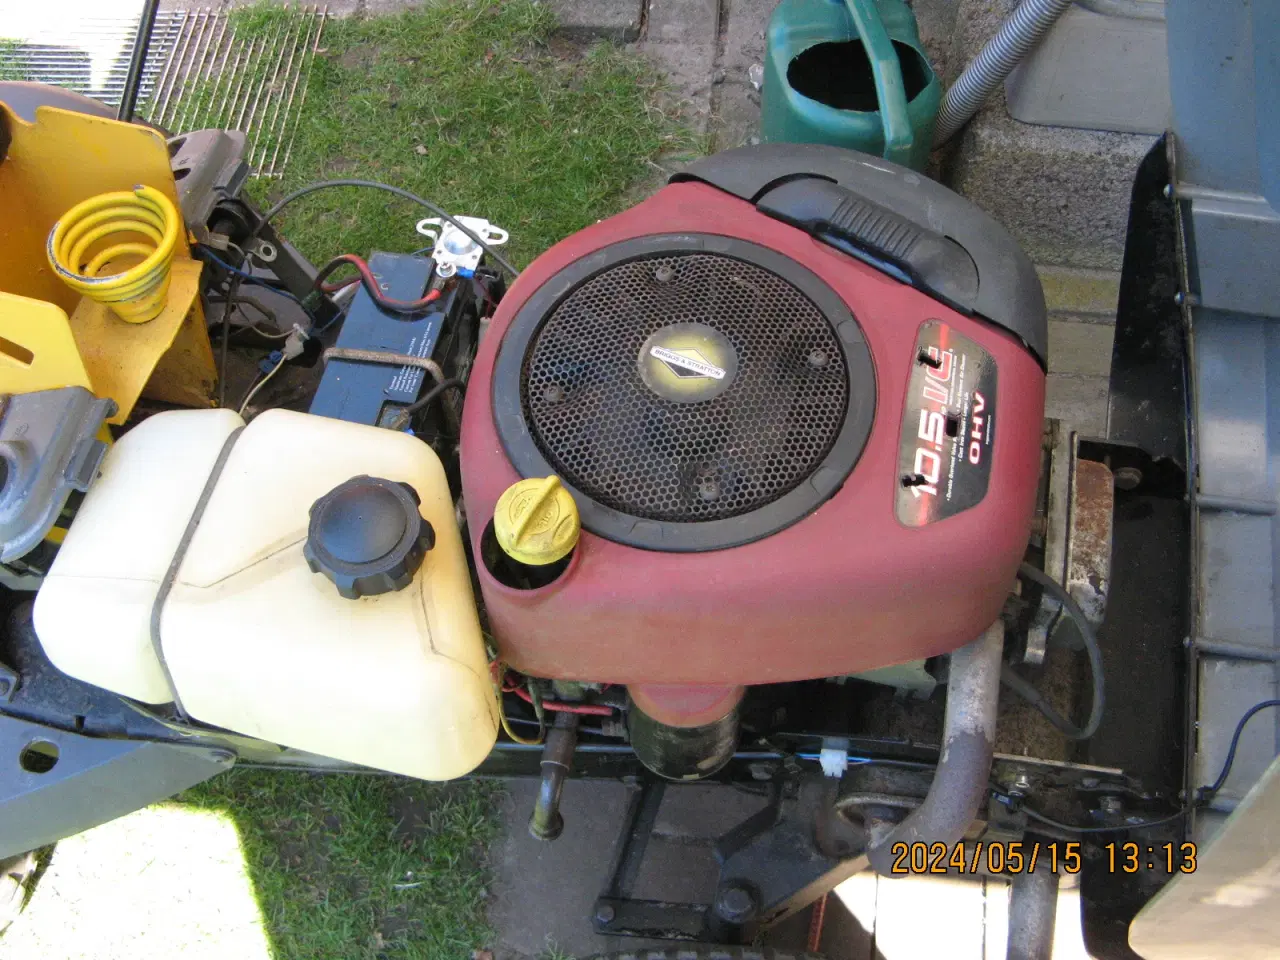 Billede 8 - Stiga traktor med el.rive uden klipper